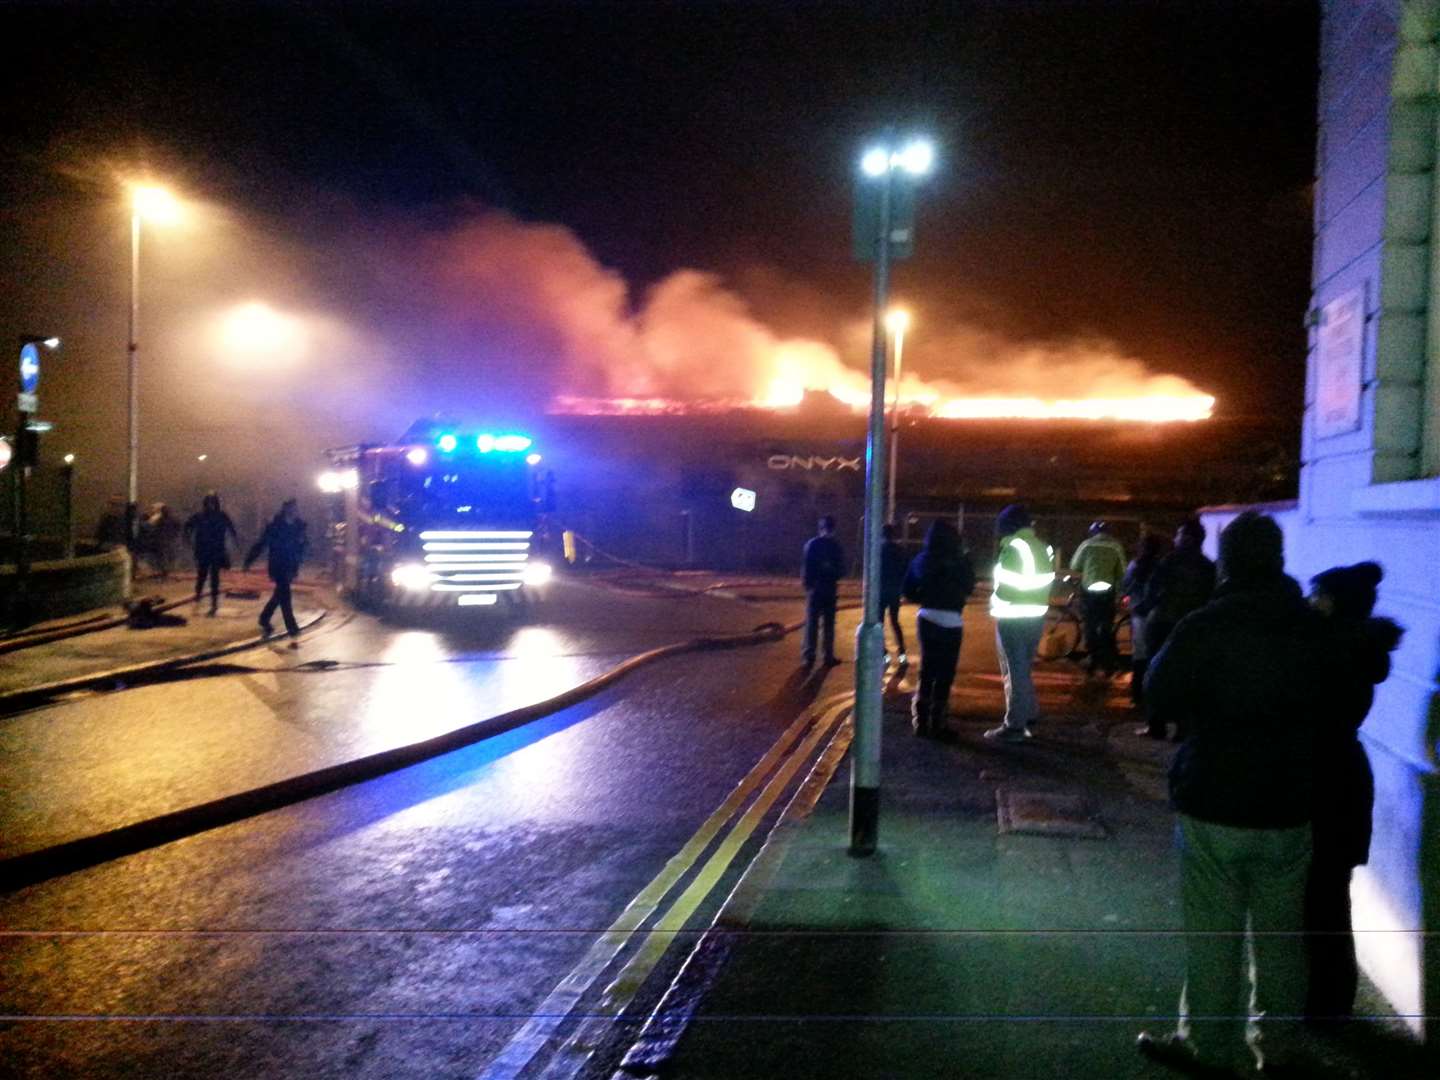 The fire at the former Onyx nightclub, Folkestone